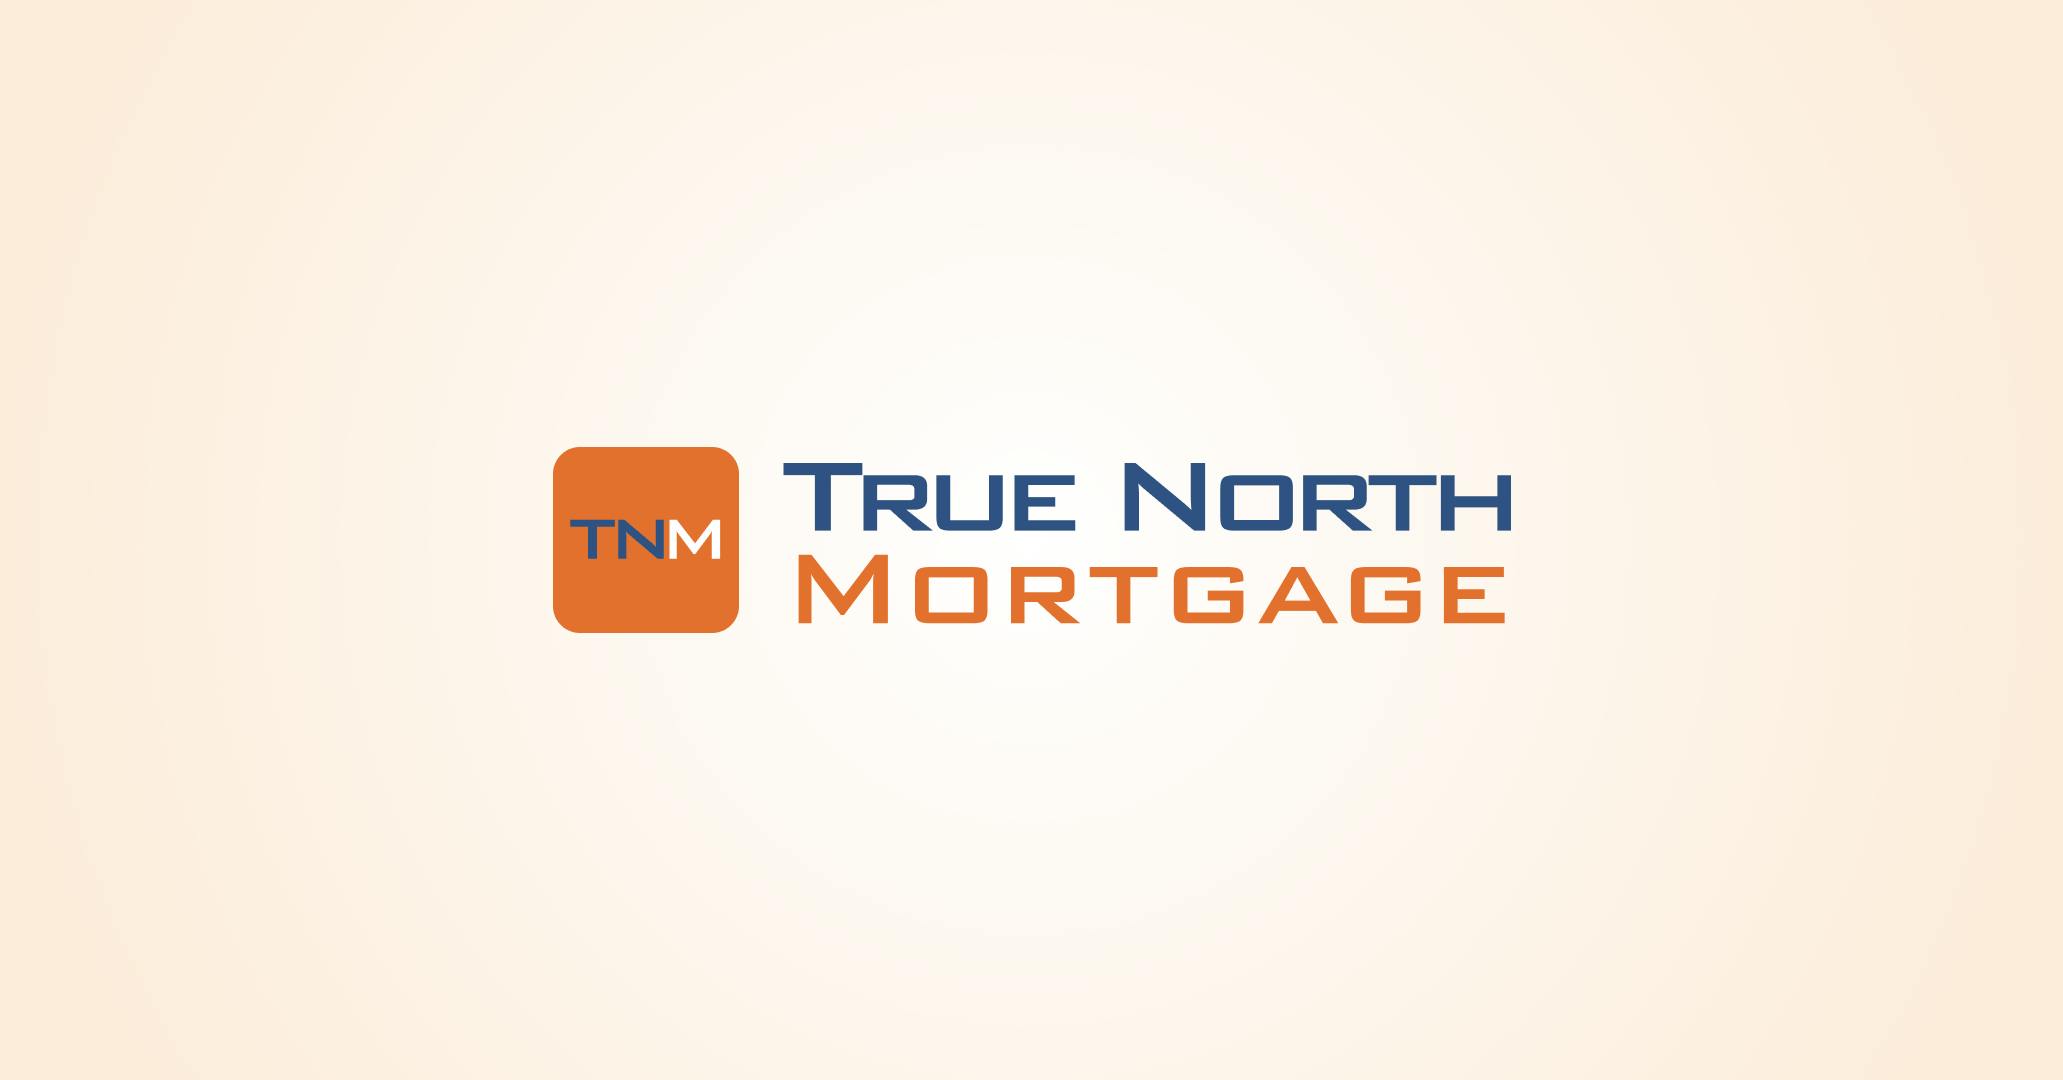 True North Mortgage ranks 141 on the 2015 PROFIT 500